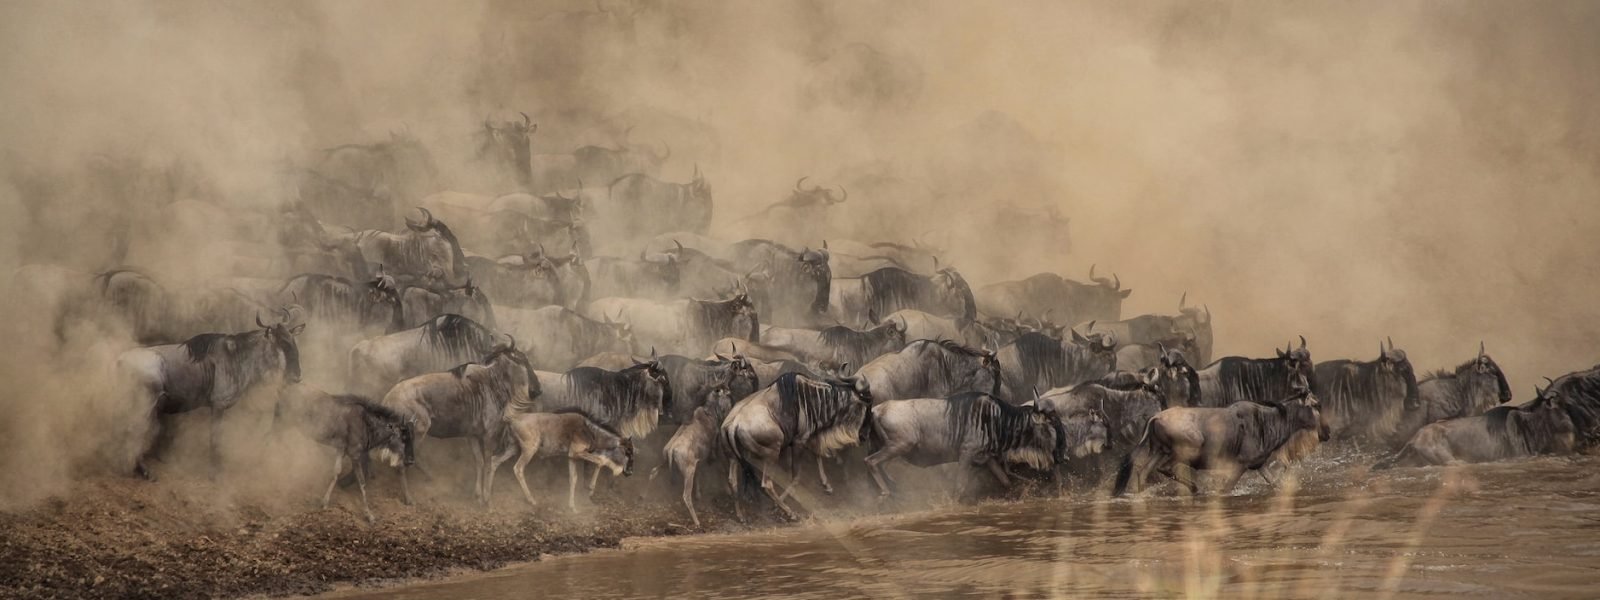 The great migration Maasai Mara Migration, Tanzania Serengeti | Destinations East Africa